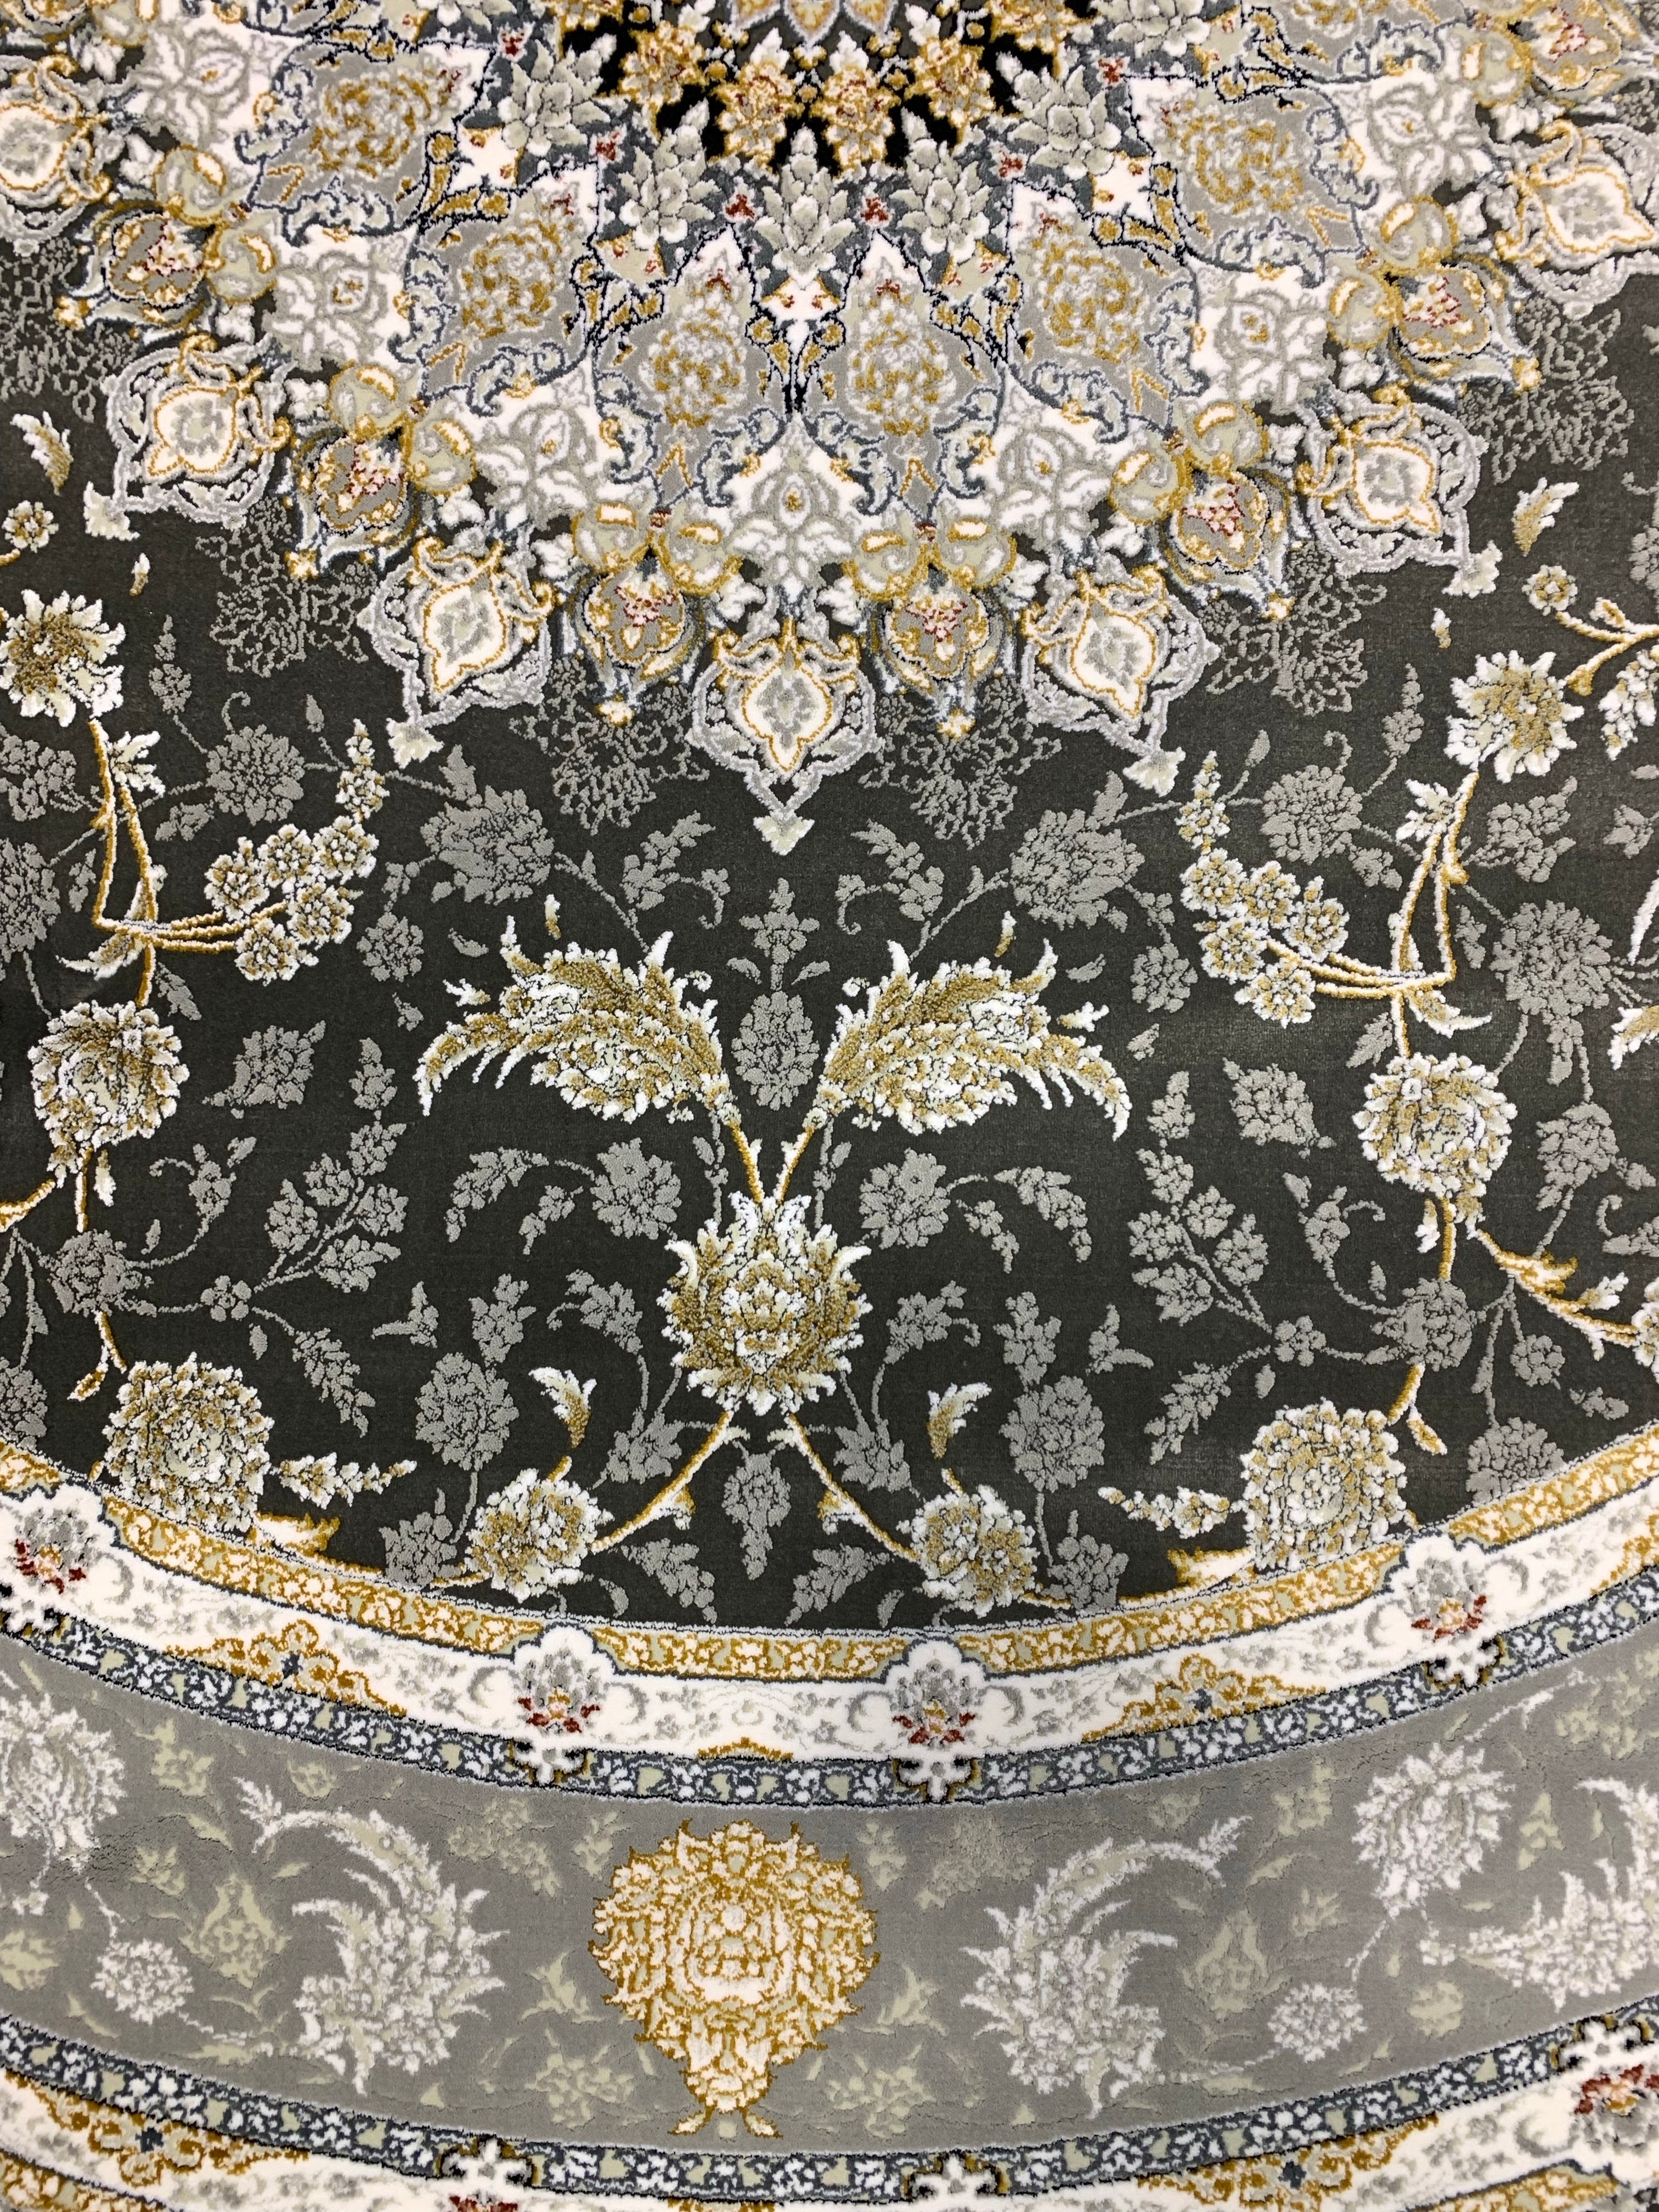 Isfahan Smoky Round Rug, Canadian rugs, Iranian rugs